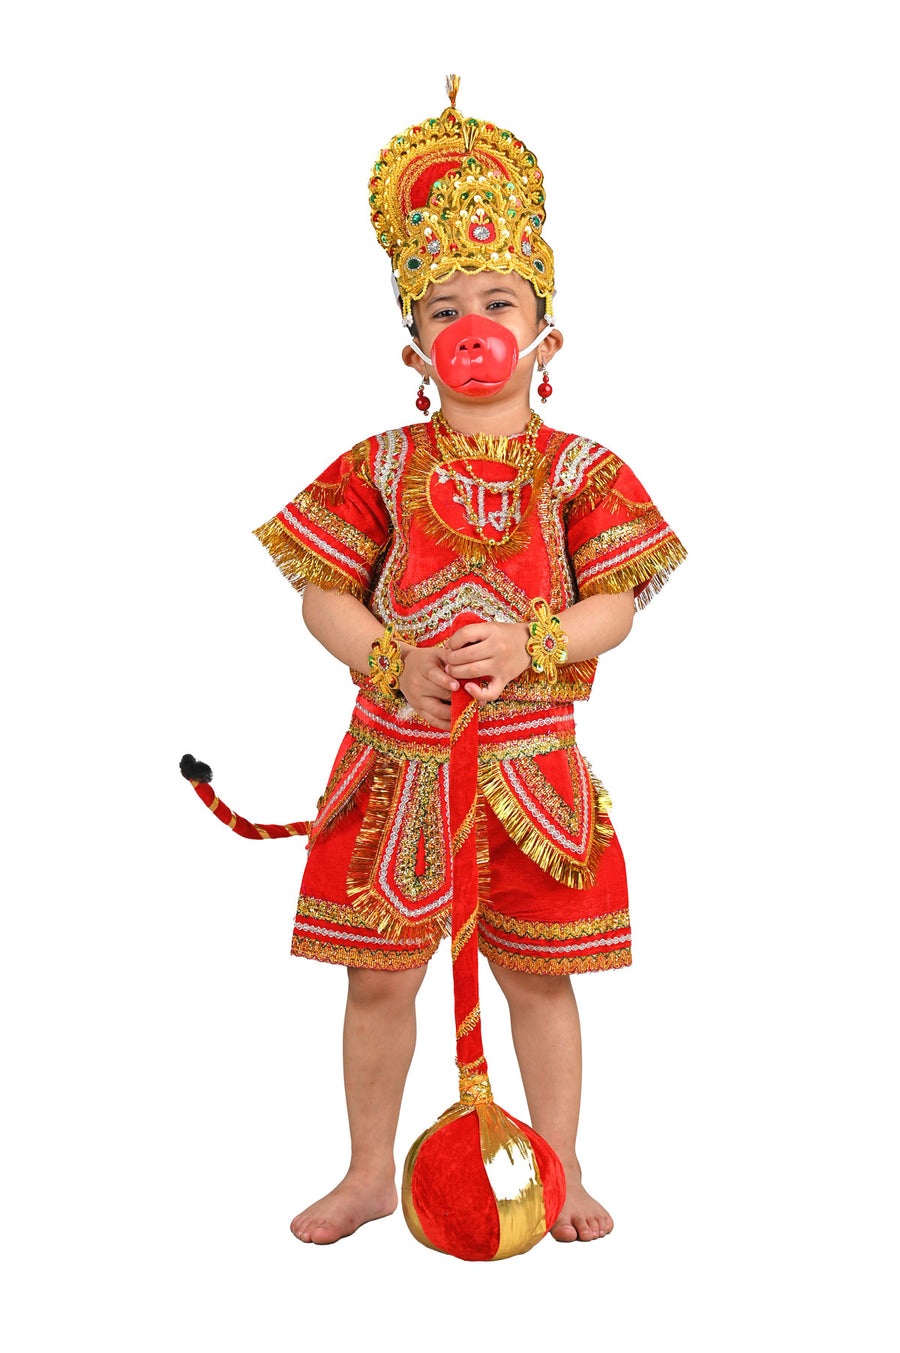 Gods Costume | Buy or Rent Kids Fancy Dress Costumes in India - Wanwasi Ram fancy  dress